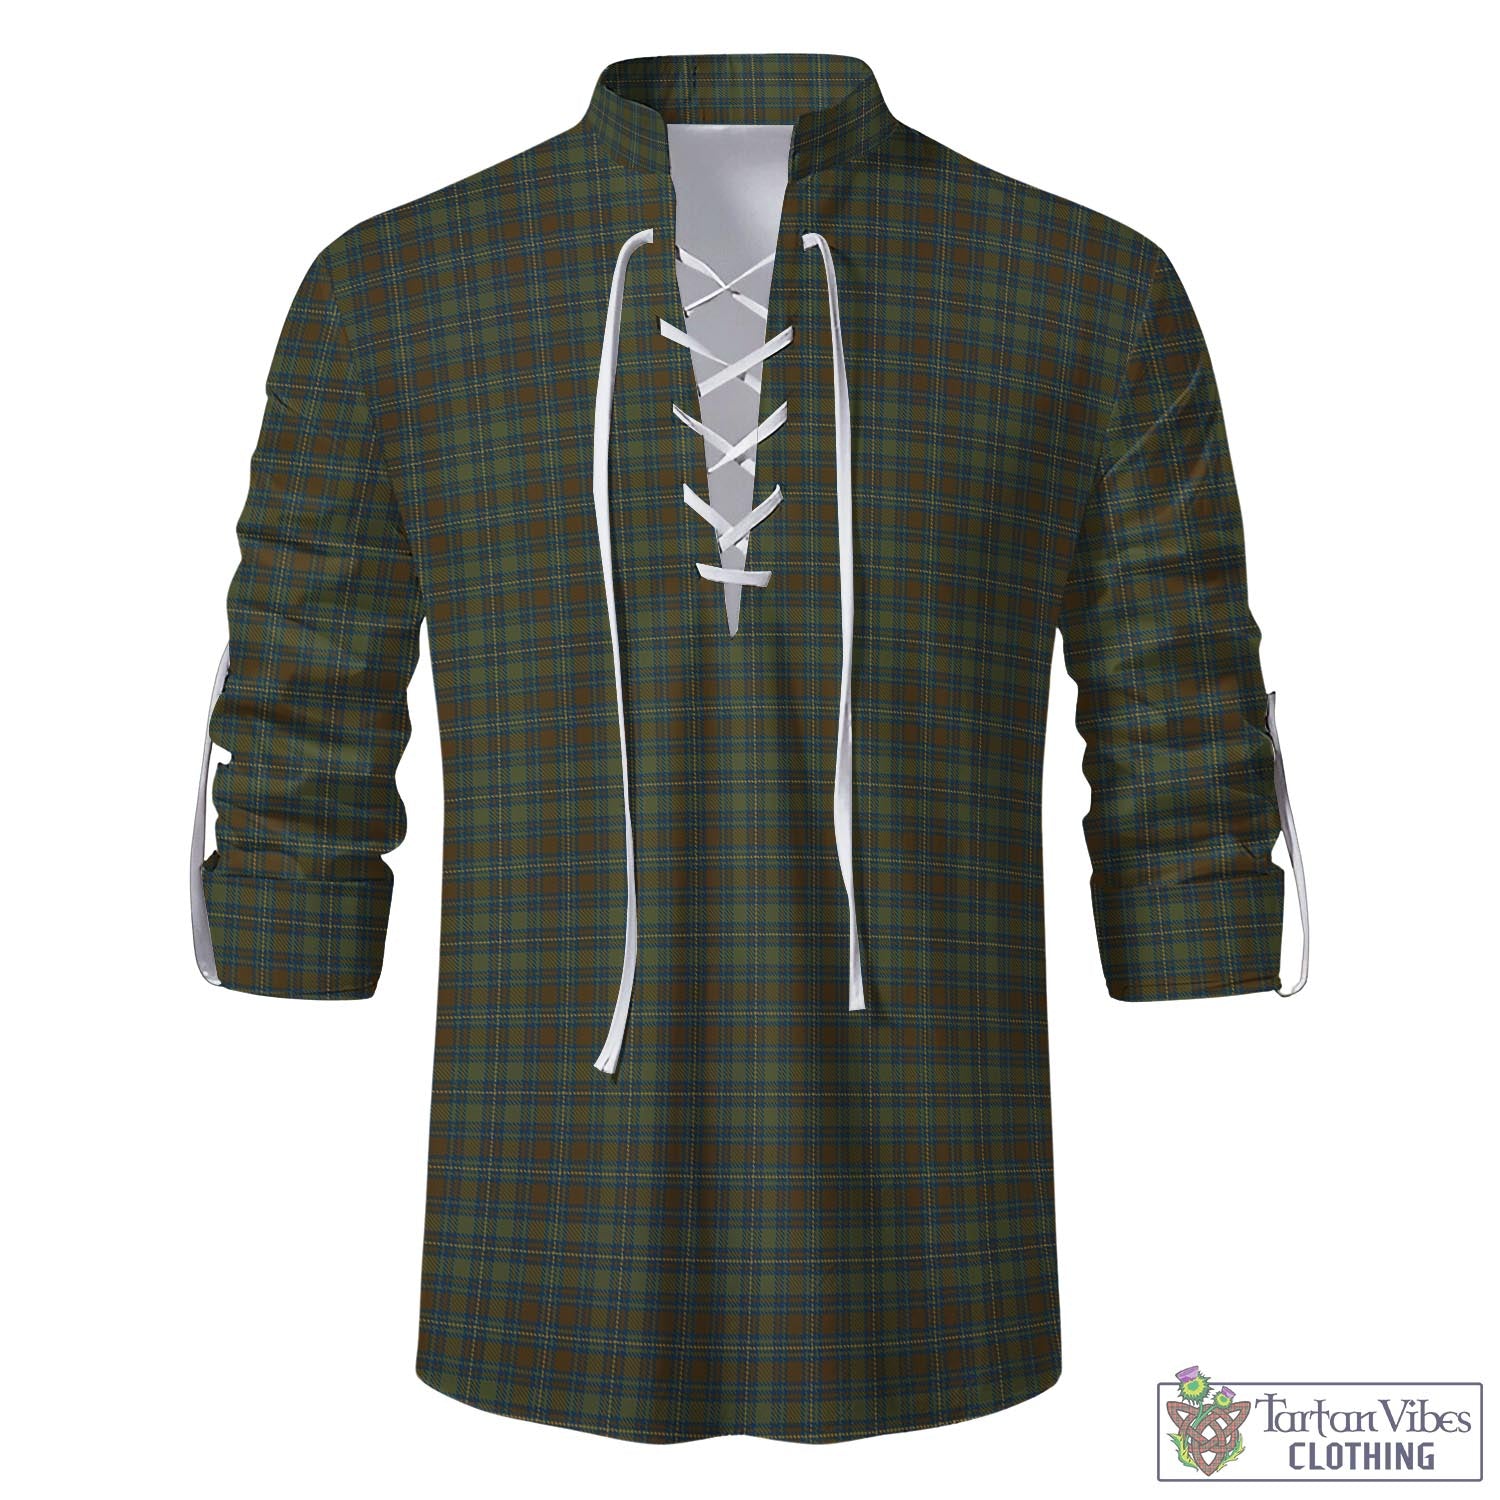 Tartan Vibes Clothing Kerry County Ireland Tartan Men's Scottish Traditional Jacobite Ghillie Kilt Shirt